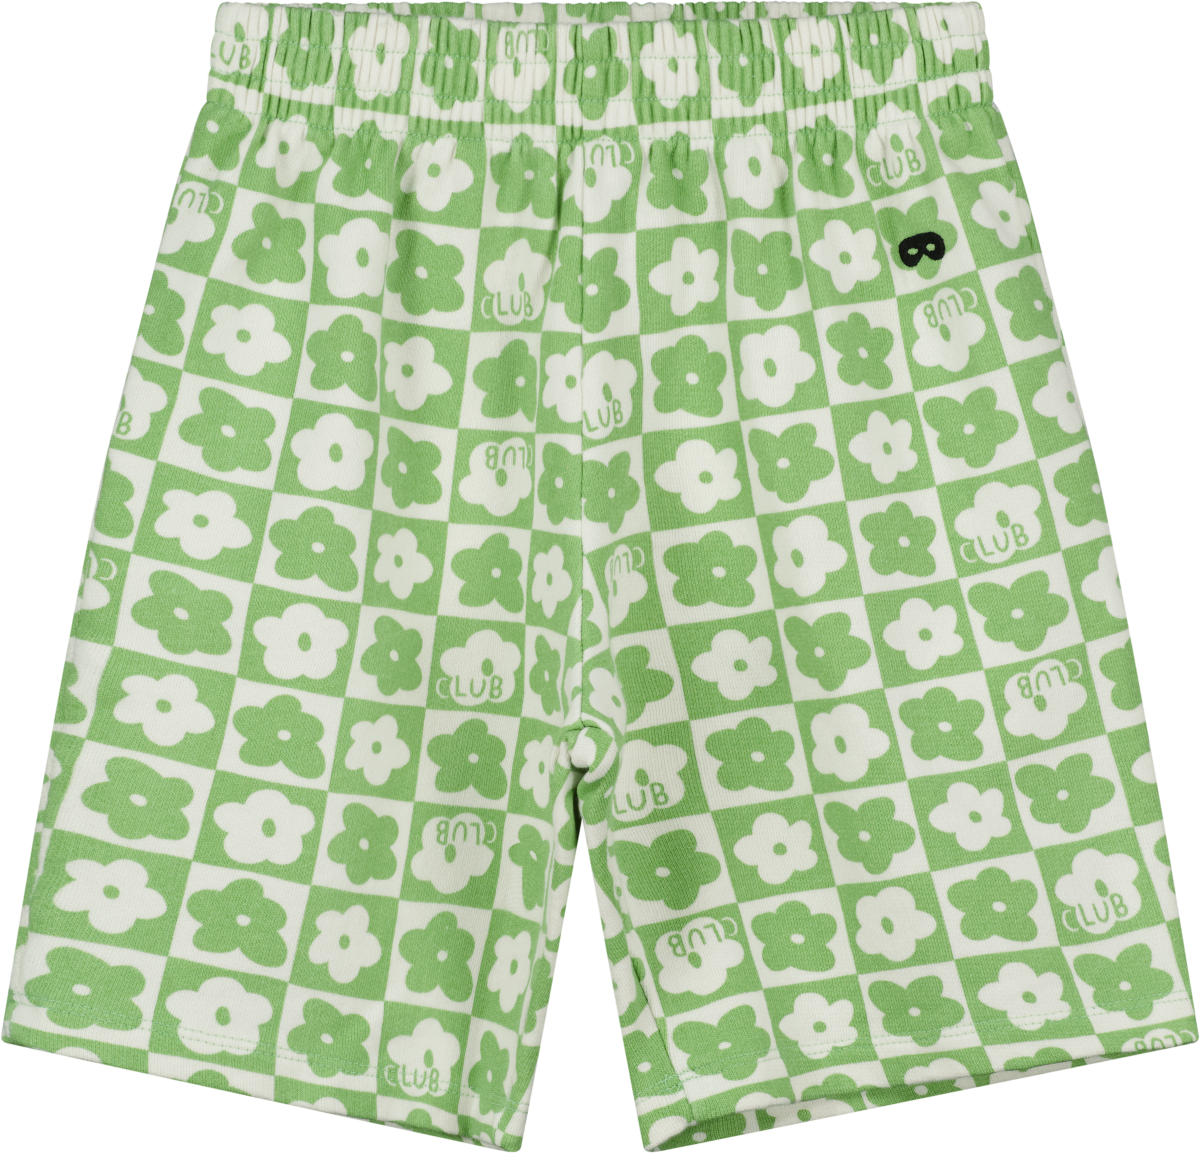 Club Olive Green Shorts